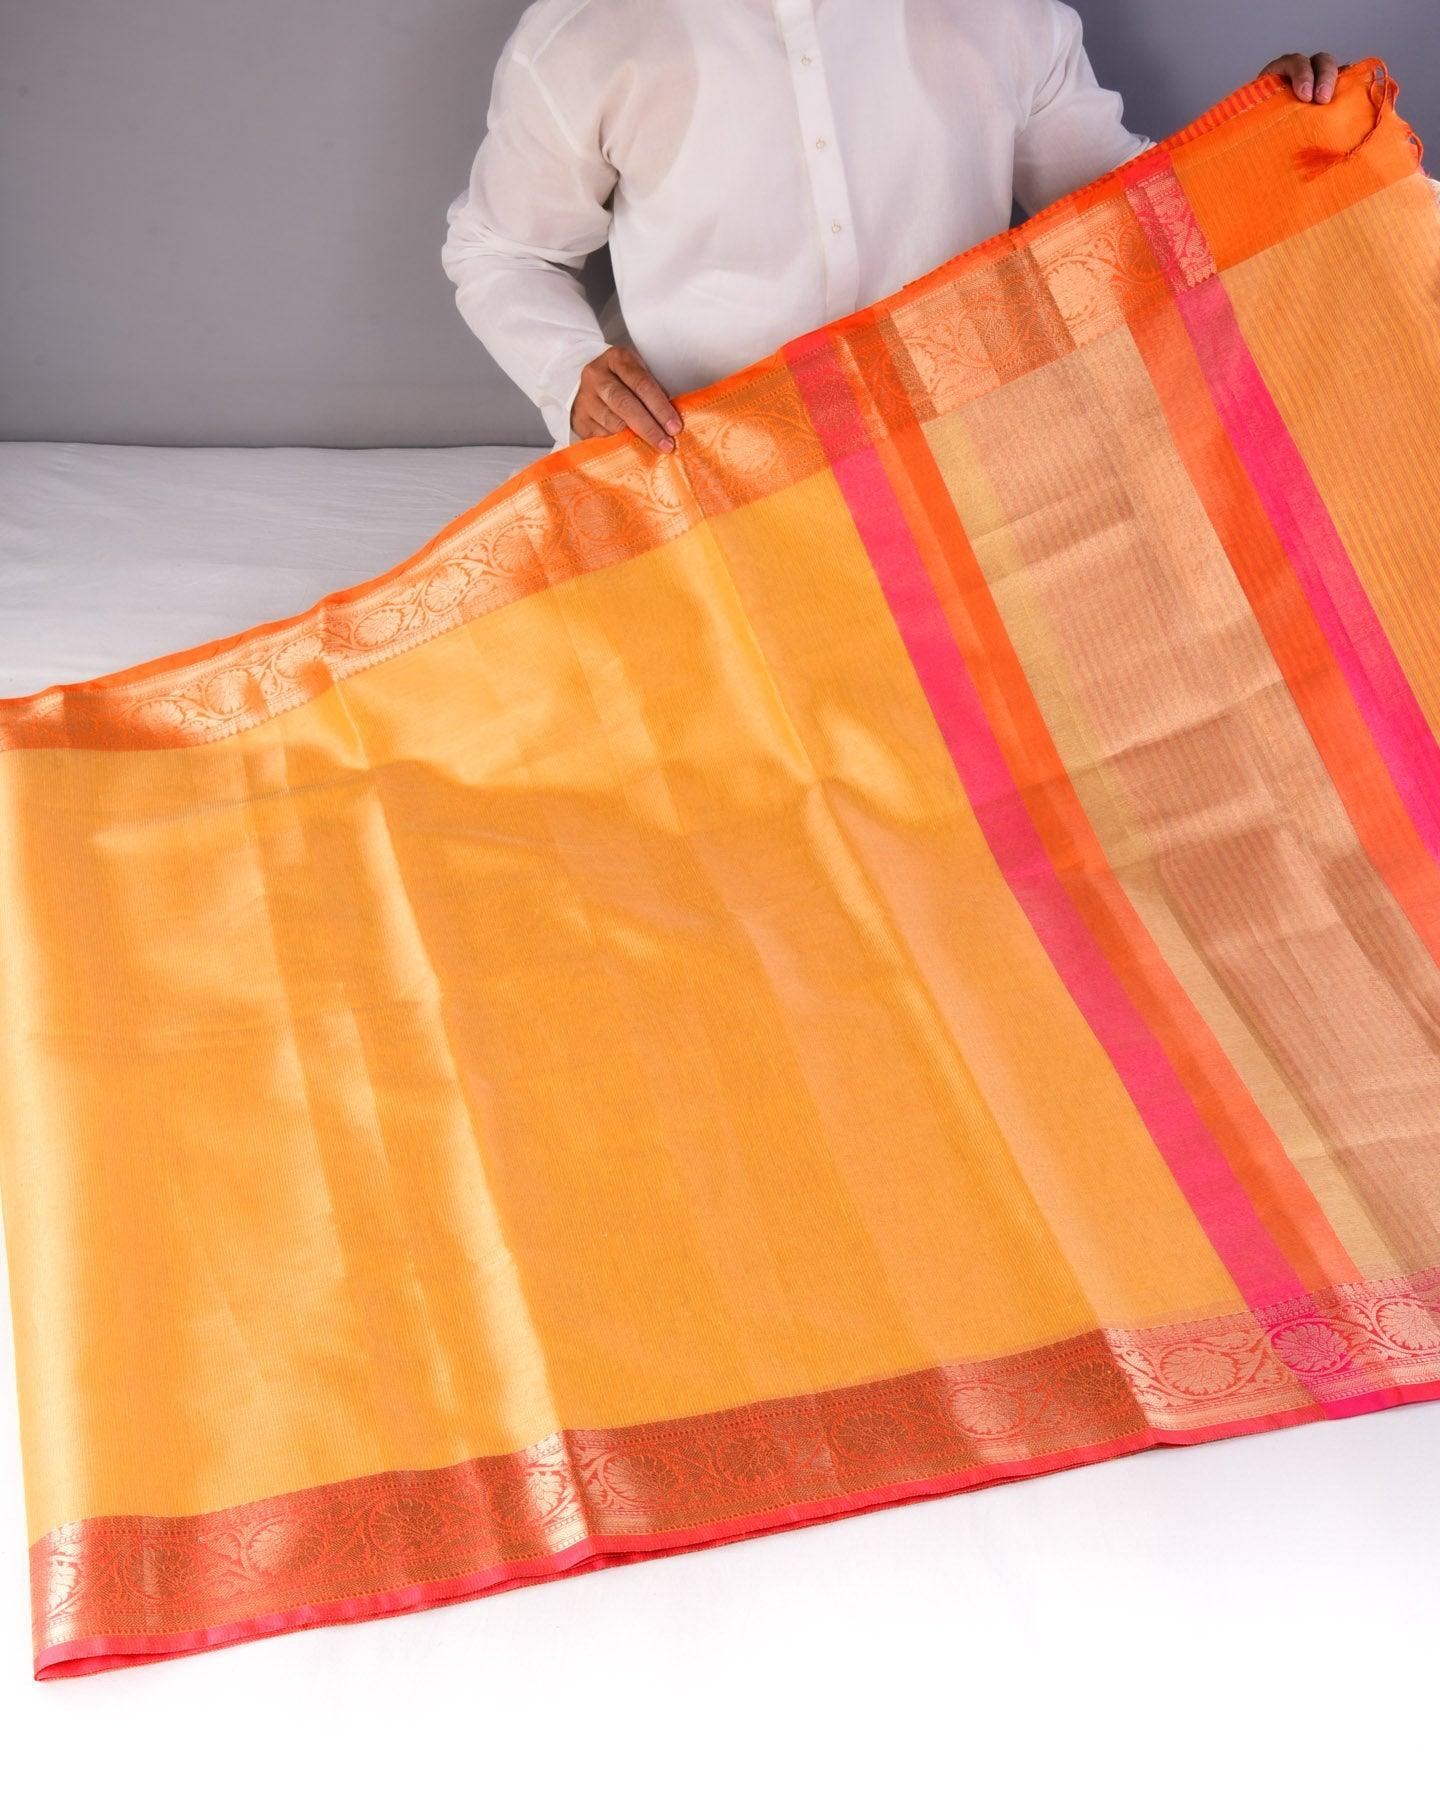 Yellow Banarasi Brocade Woven Cotton Tissue Saree - By HolyWeaves, Benares